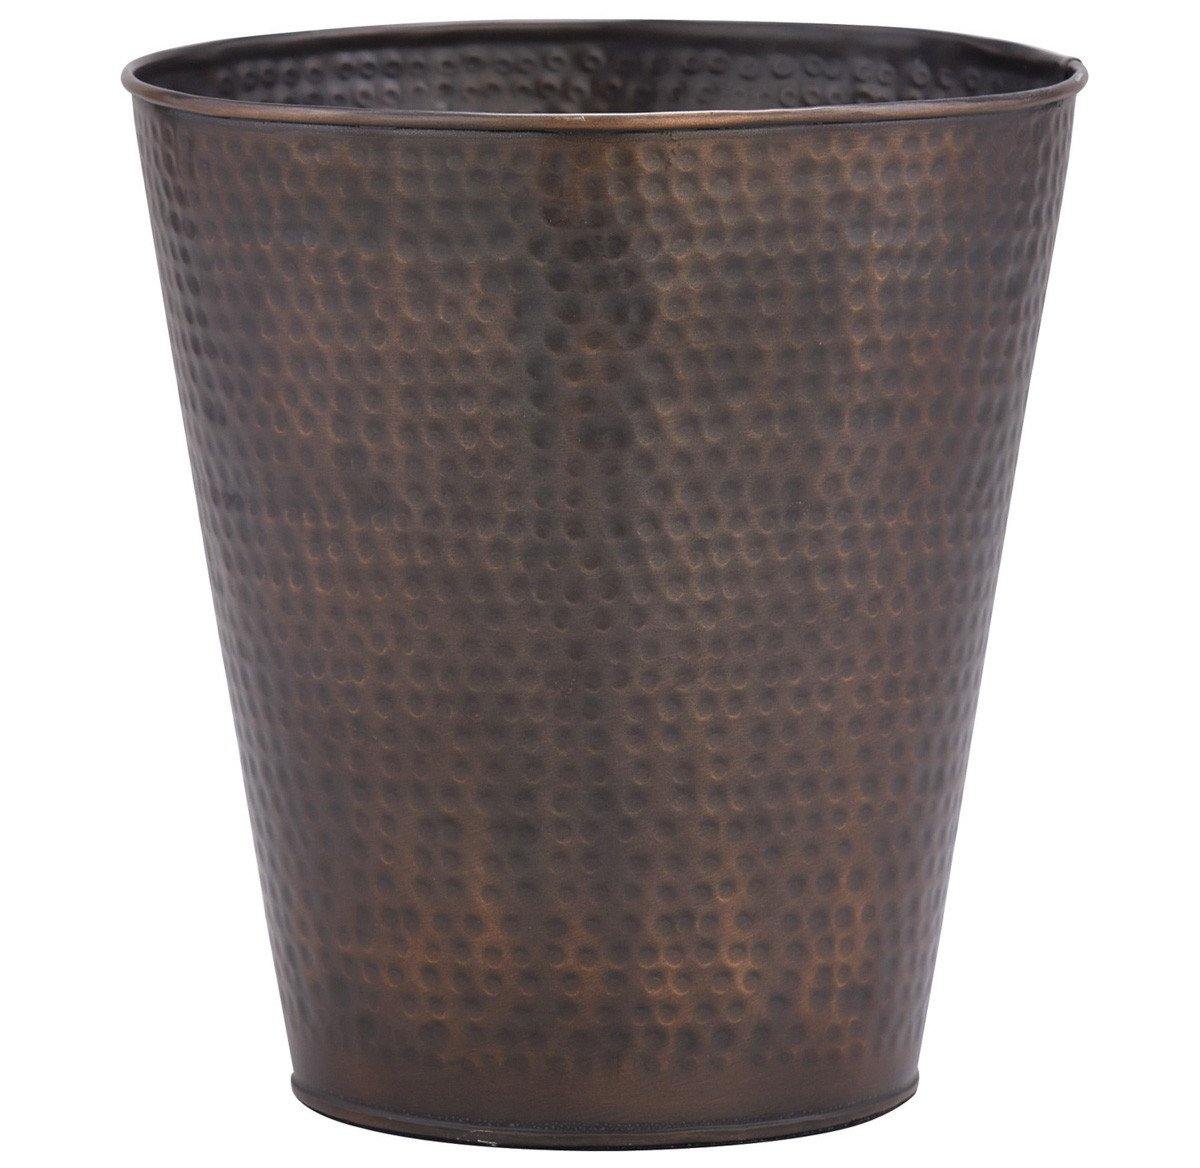 Hammered Copper Finish Waste Basket - The Fox Decor